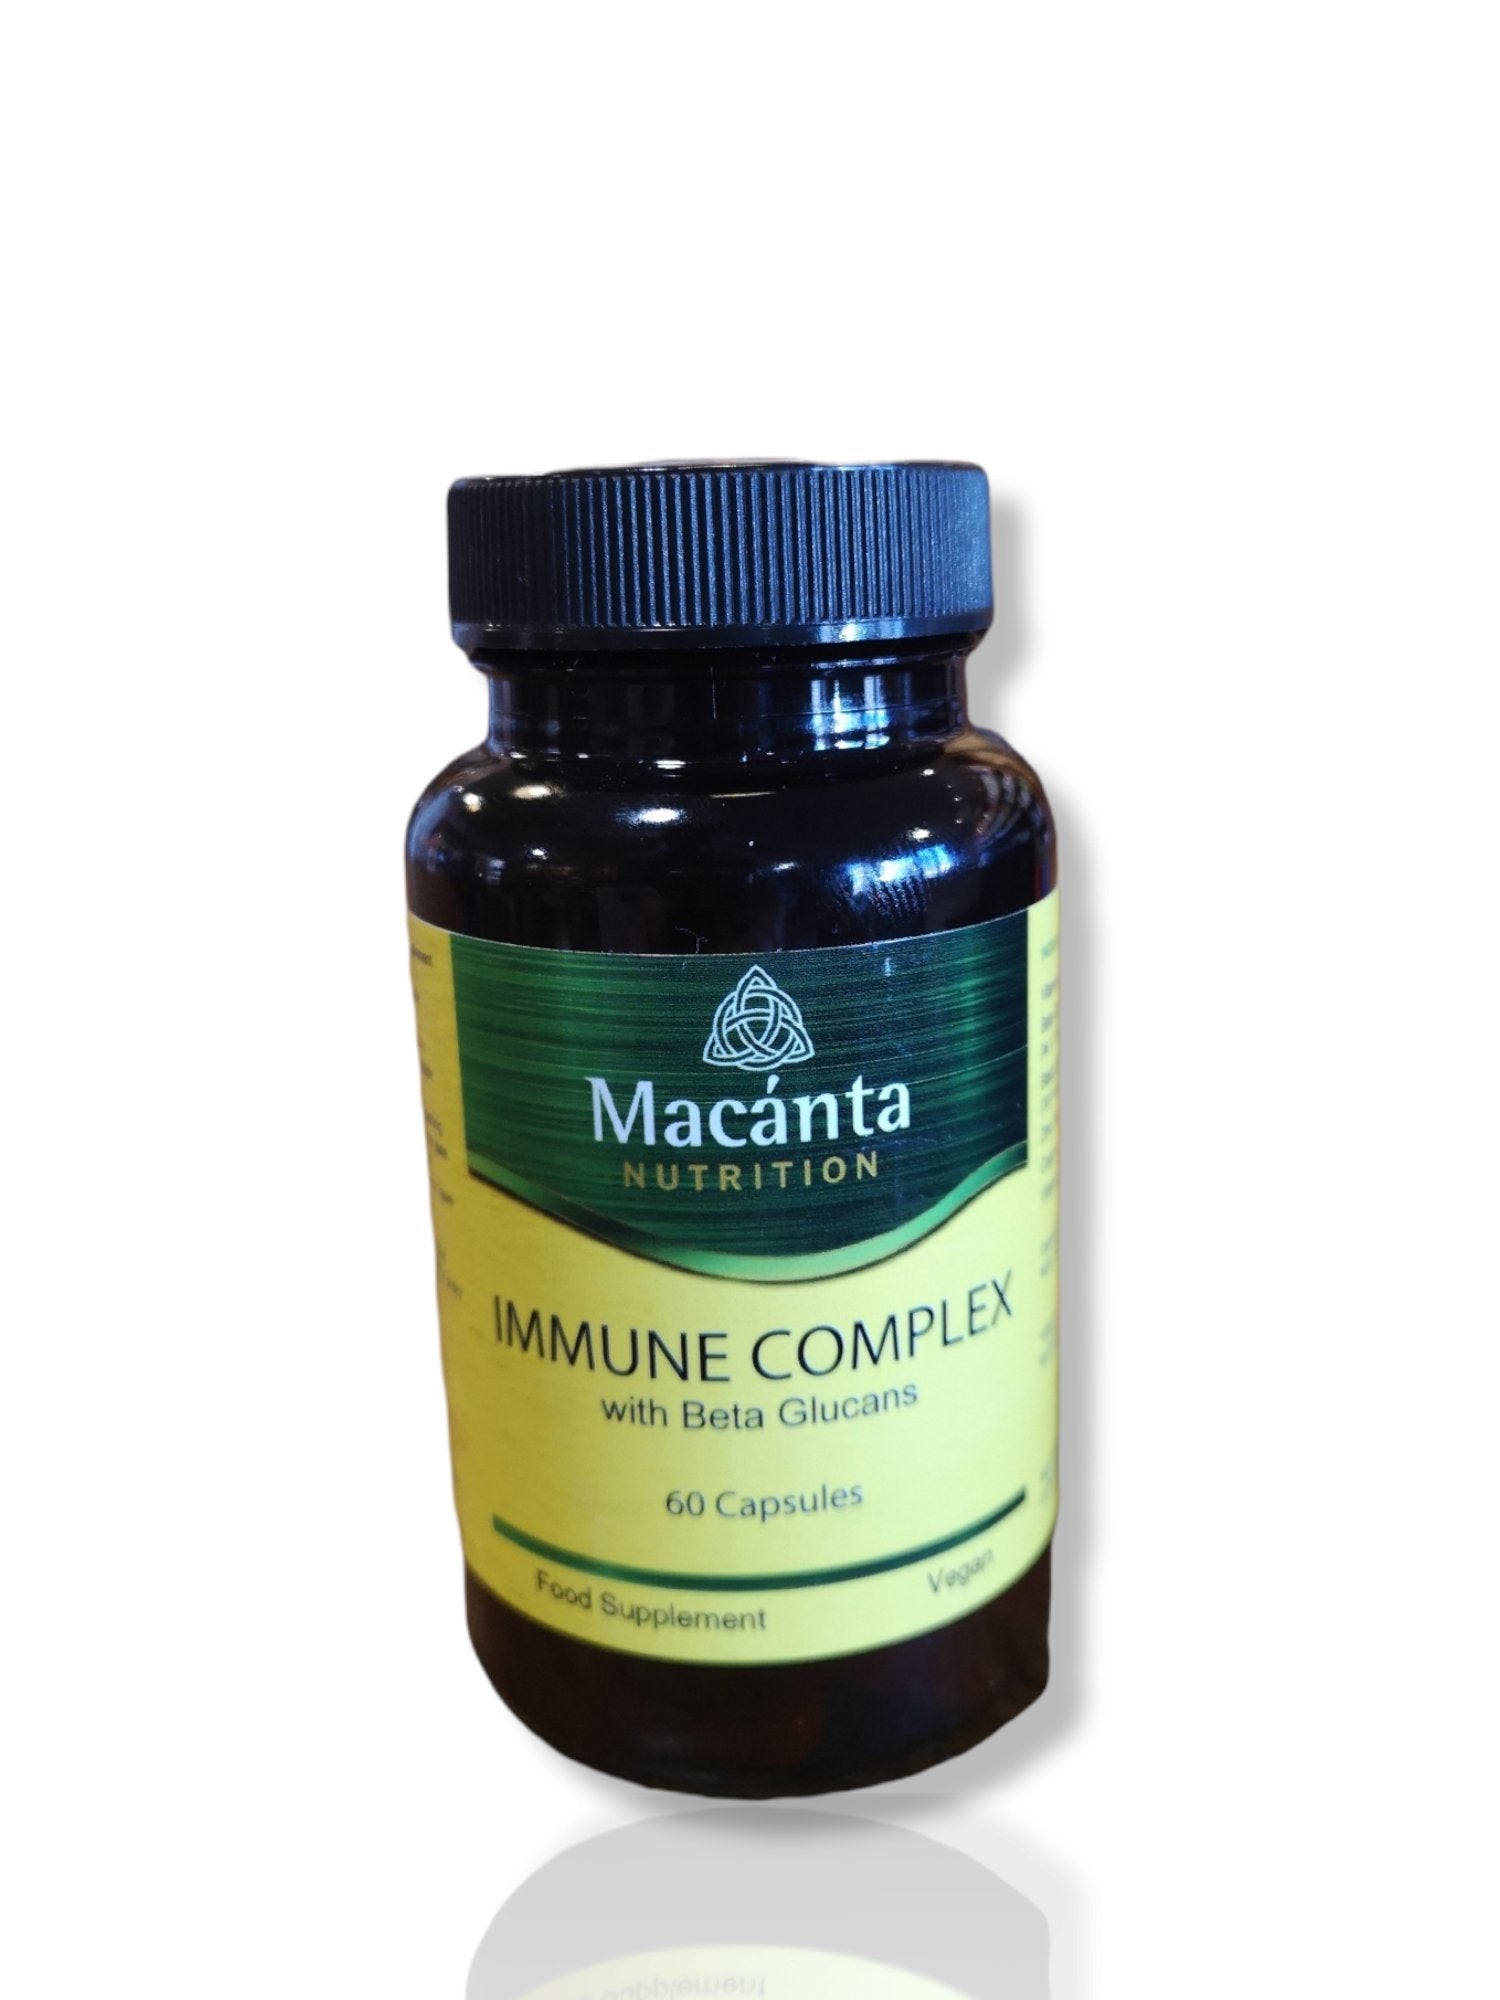 Macánta Immune Complex 60Capsules - HealthyLiving.ie